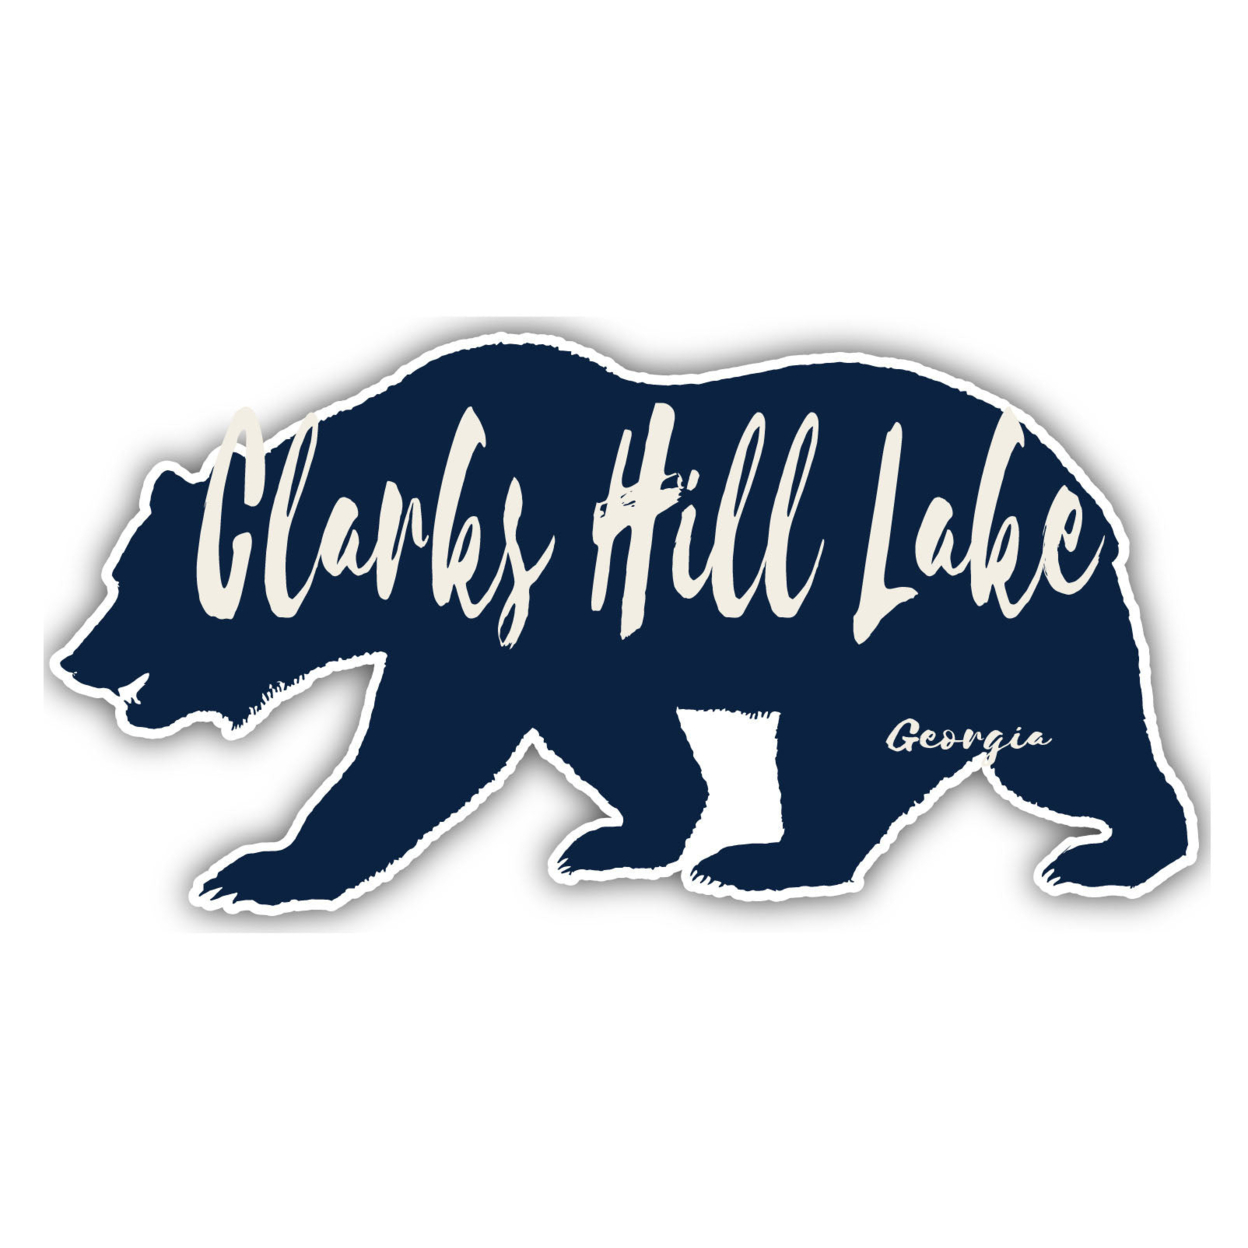 Clarks Hill Lake Georgia Souvenir Decorative Stickers (Choose Theme And Size) - Single Unit, 8-Inch, Bear